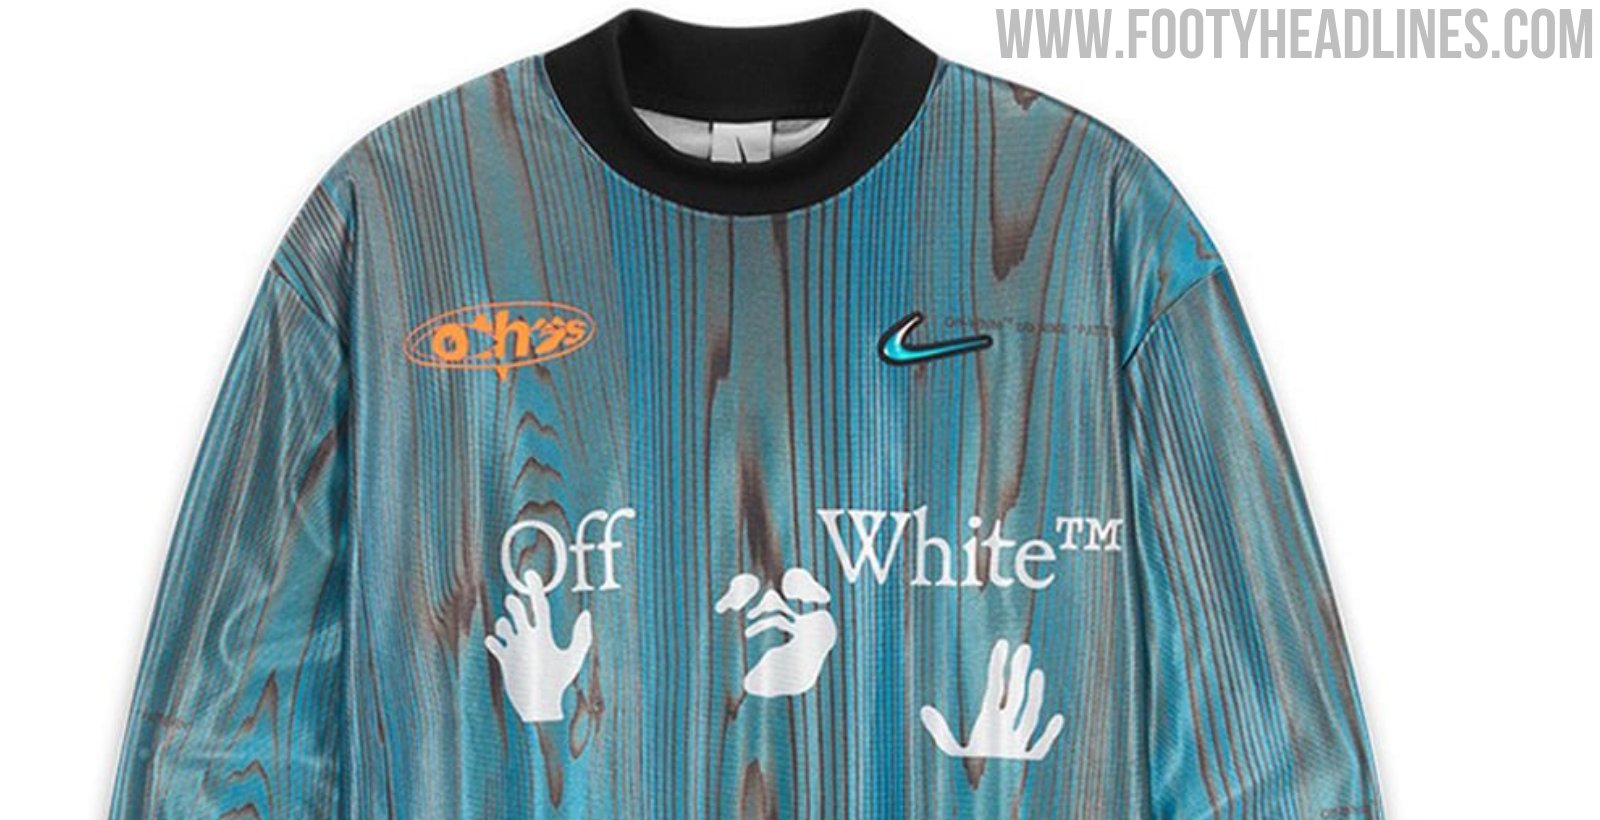 x Off-White Goalkeeper Shirt Released - Footy Headlines